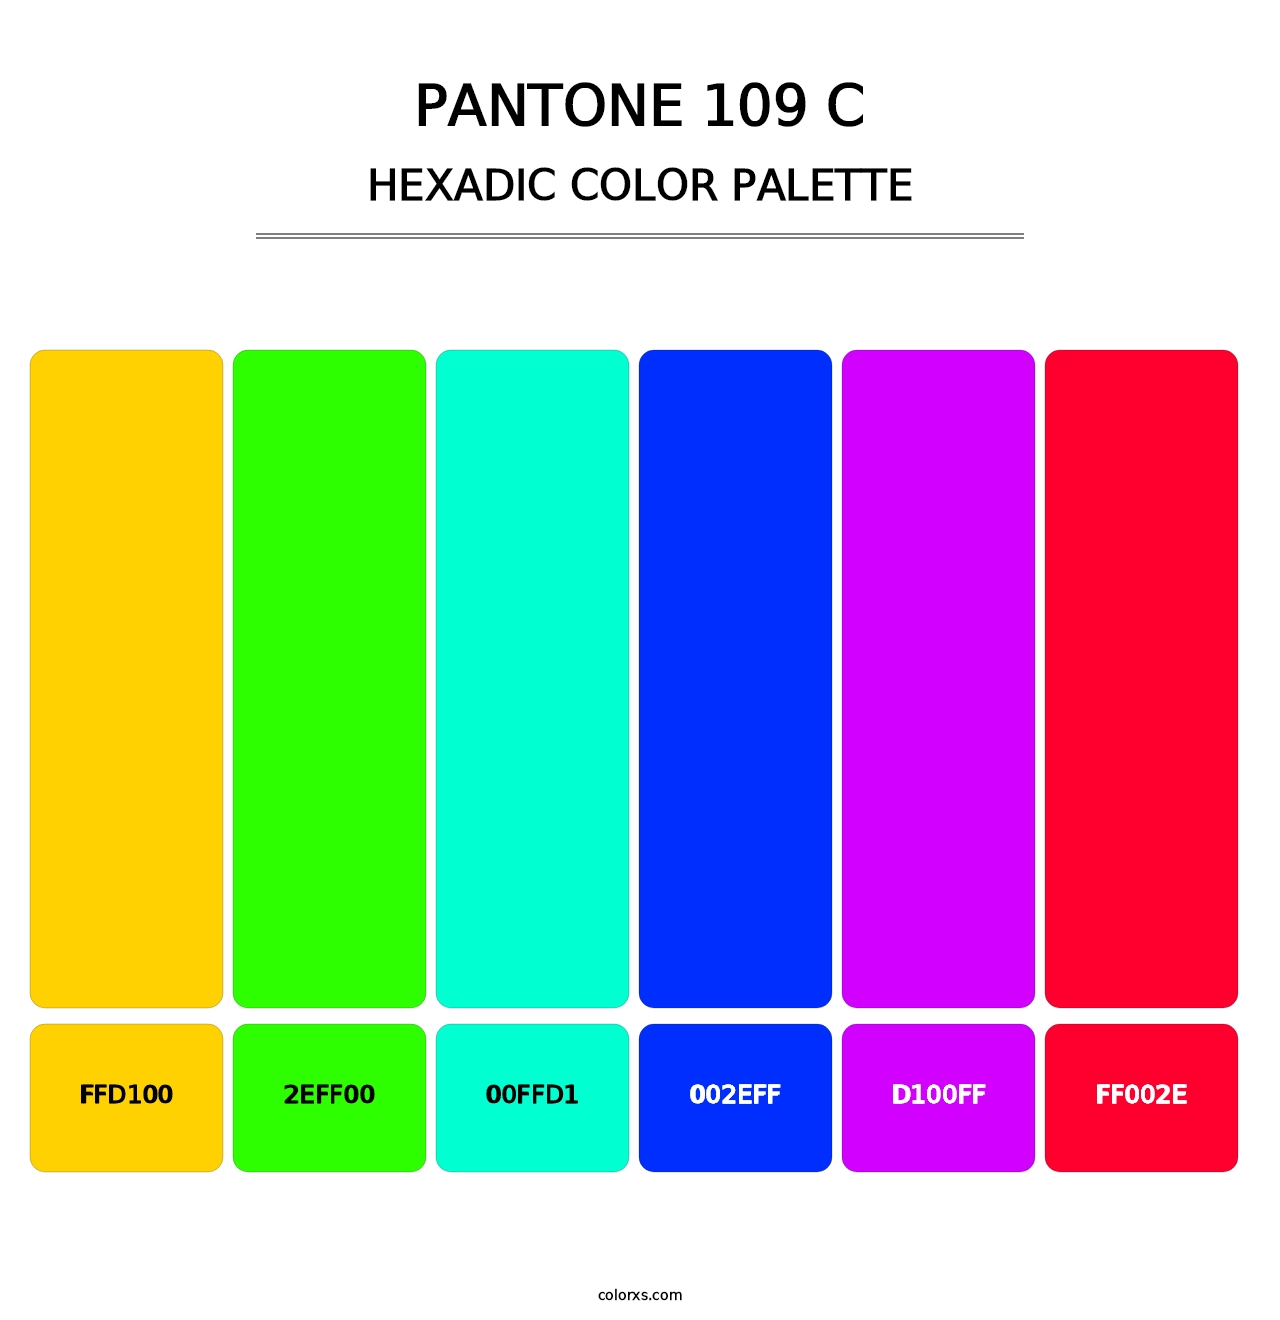 PANTONE 109 C - Hexadic Color Palette